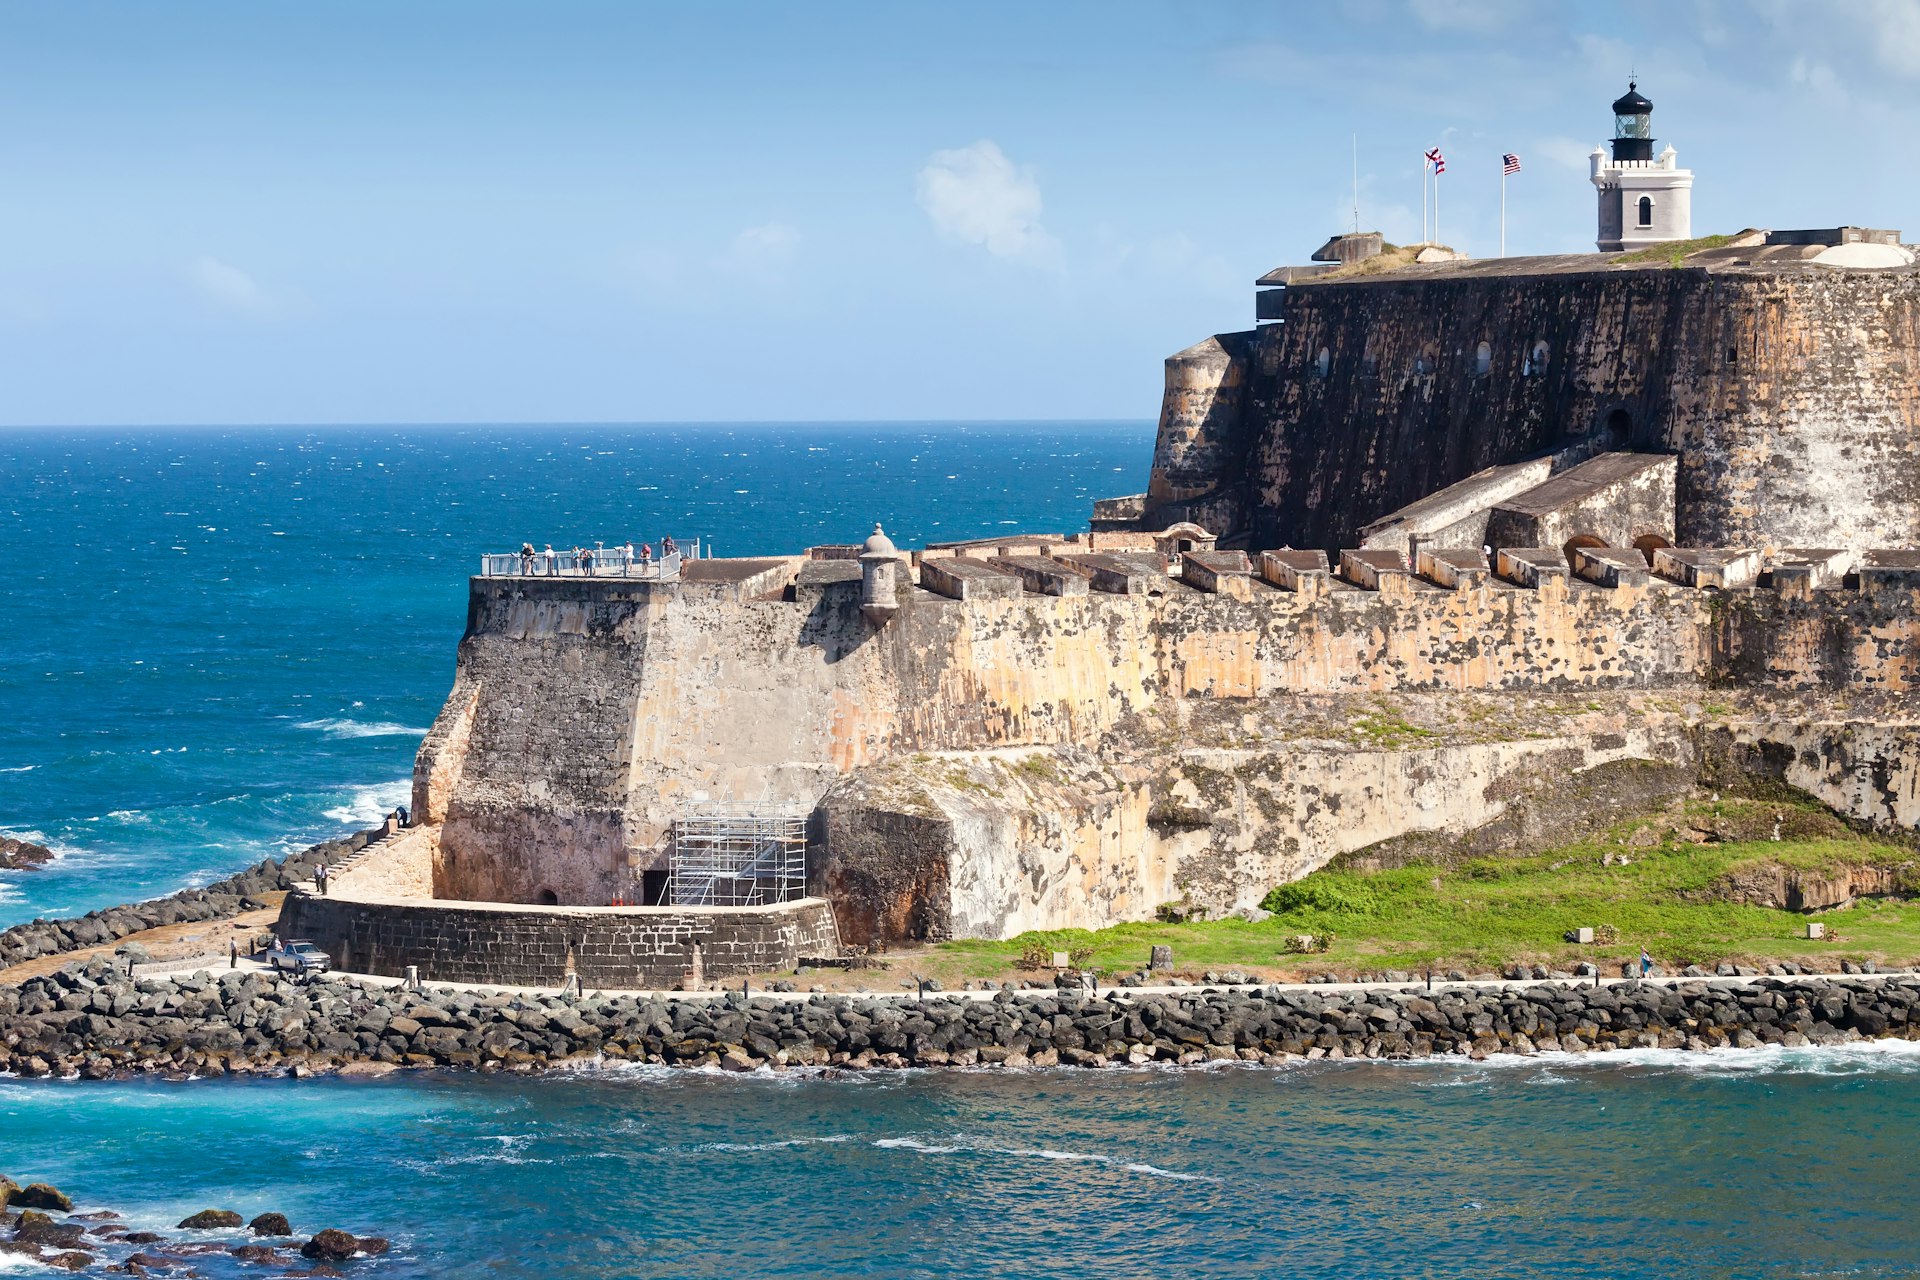 The edge and coastline of the El Morro Castle in San Juan, Puerto Rico